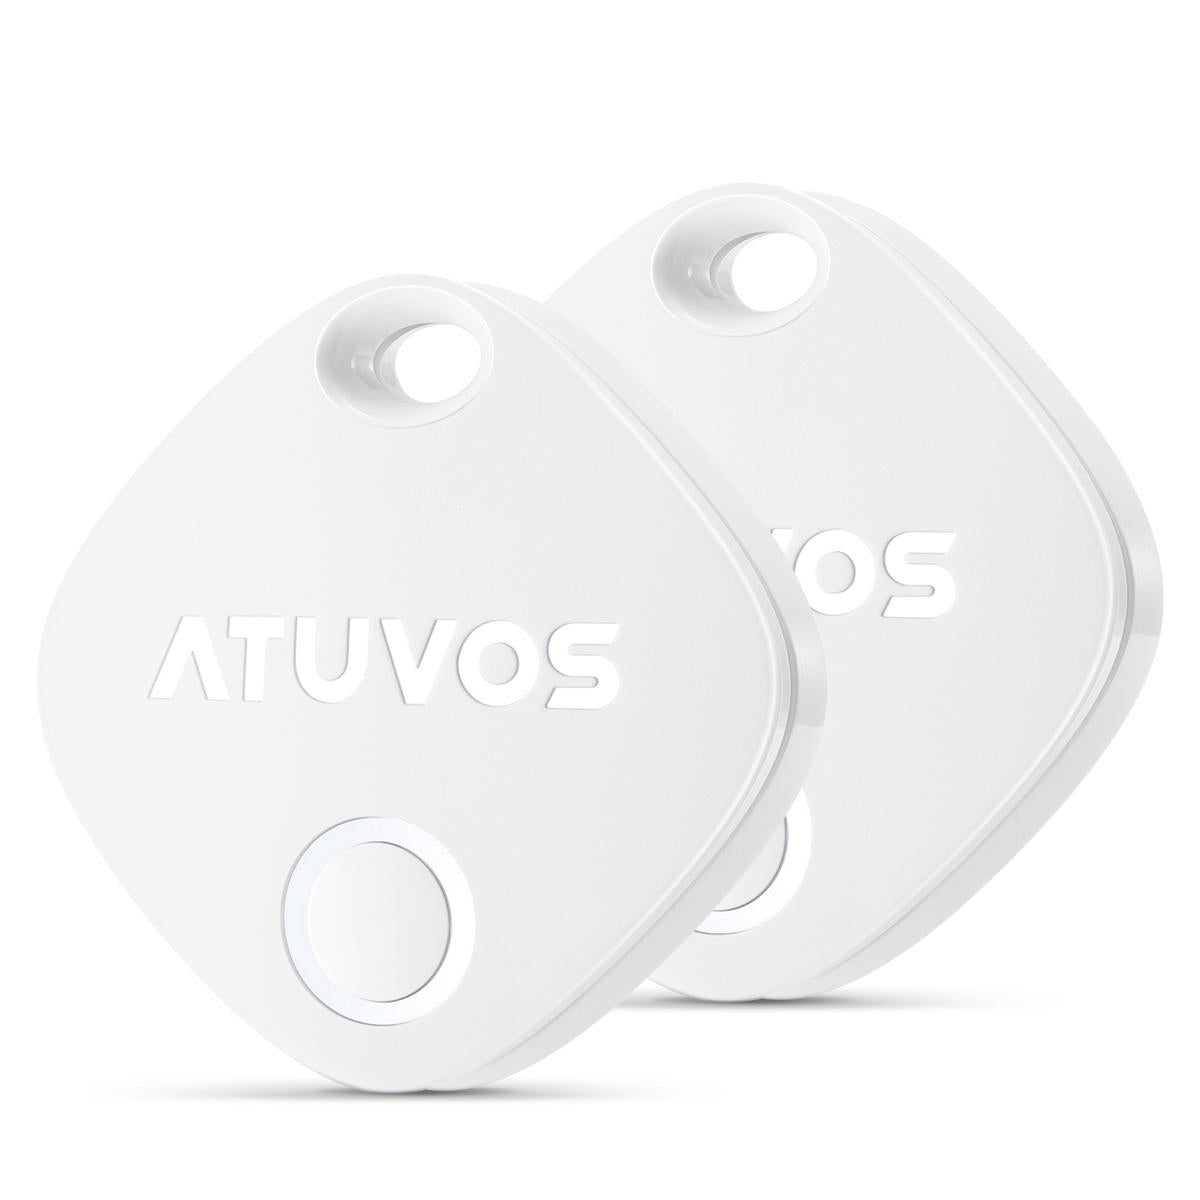 ATUVOS White Item Finder 2PCS (iOS Only)